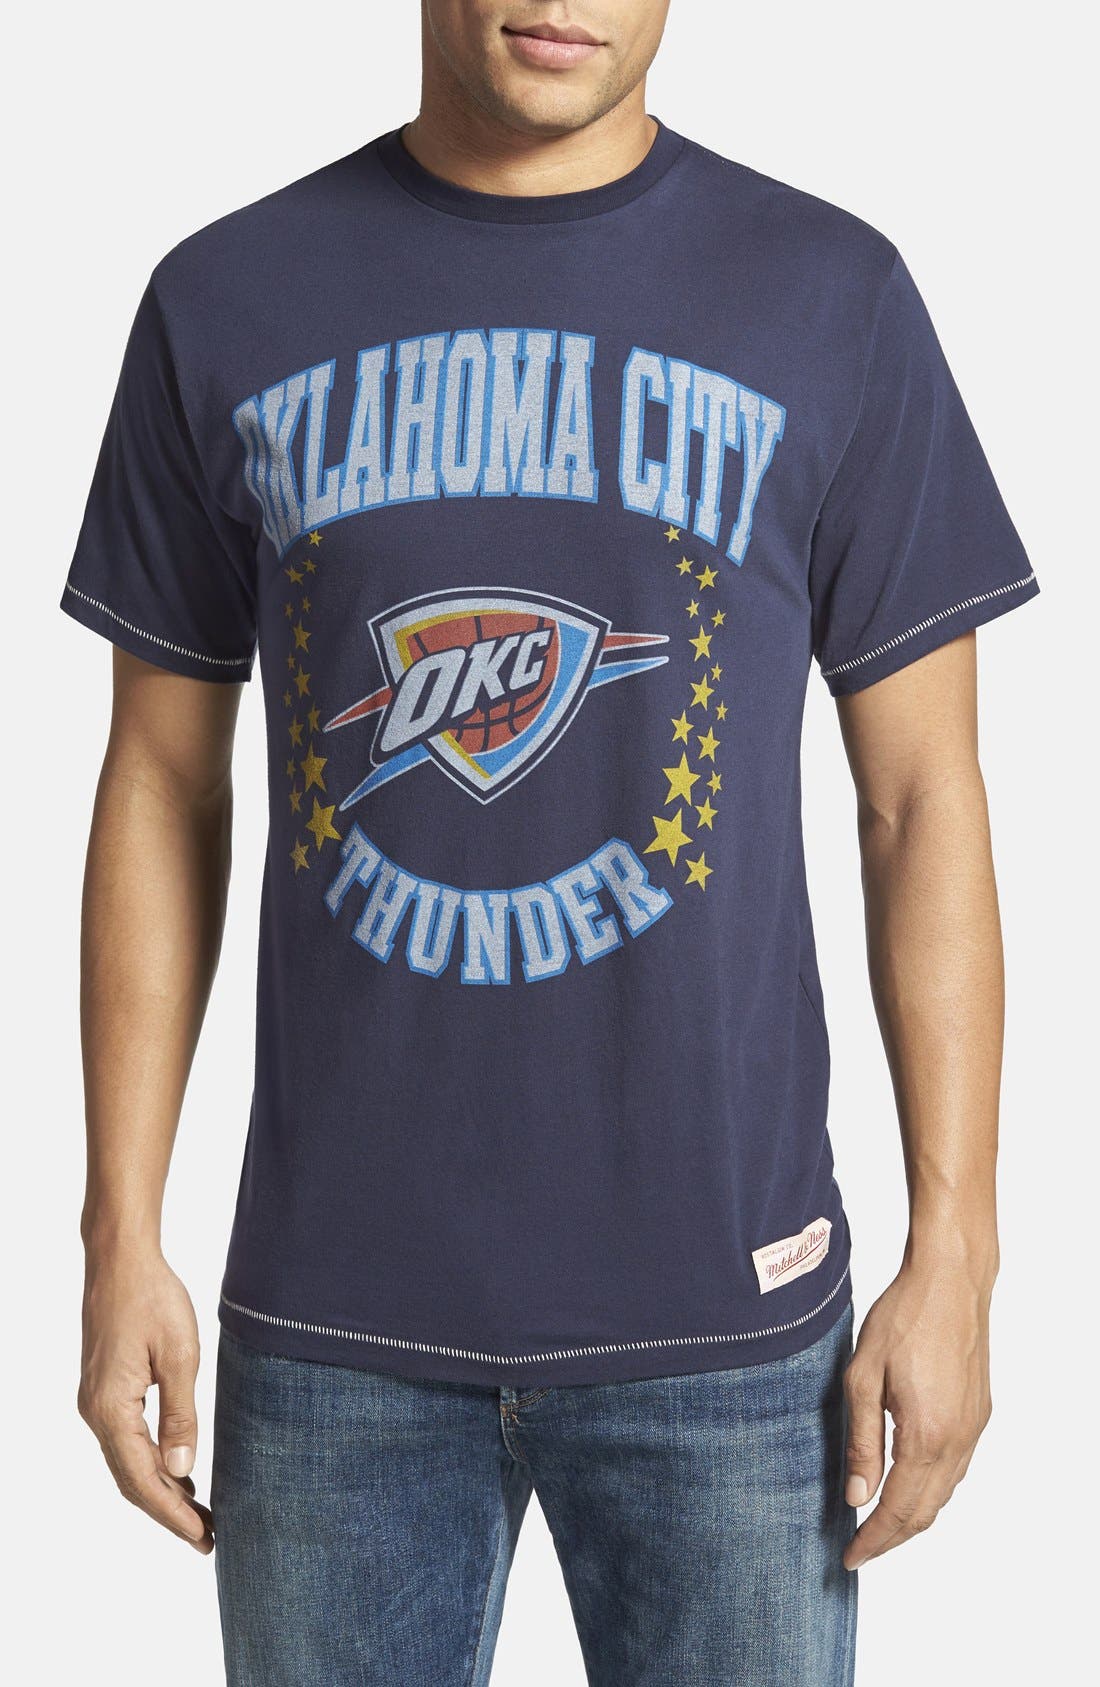 oklahoma city thunder vintage t shirts